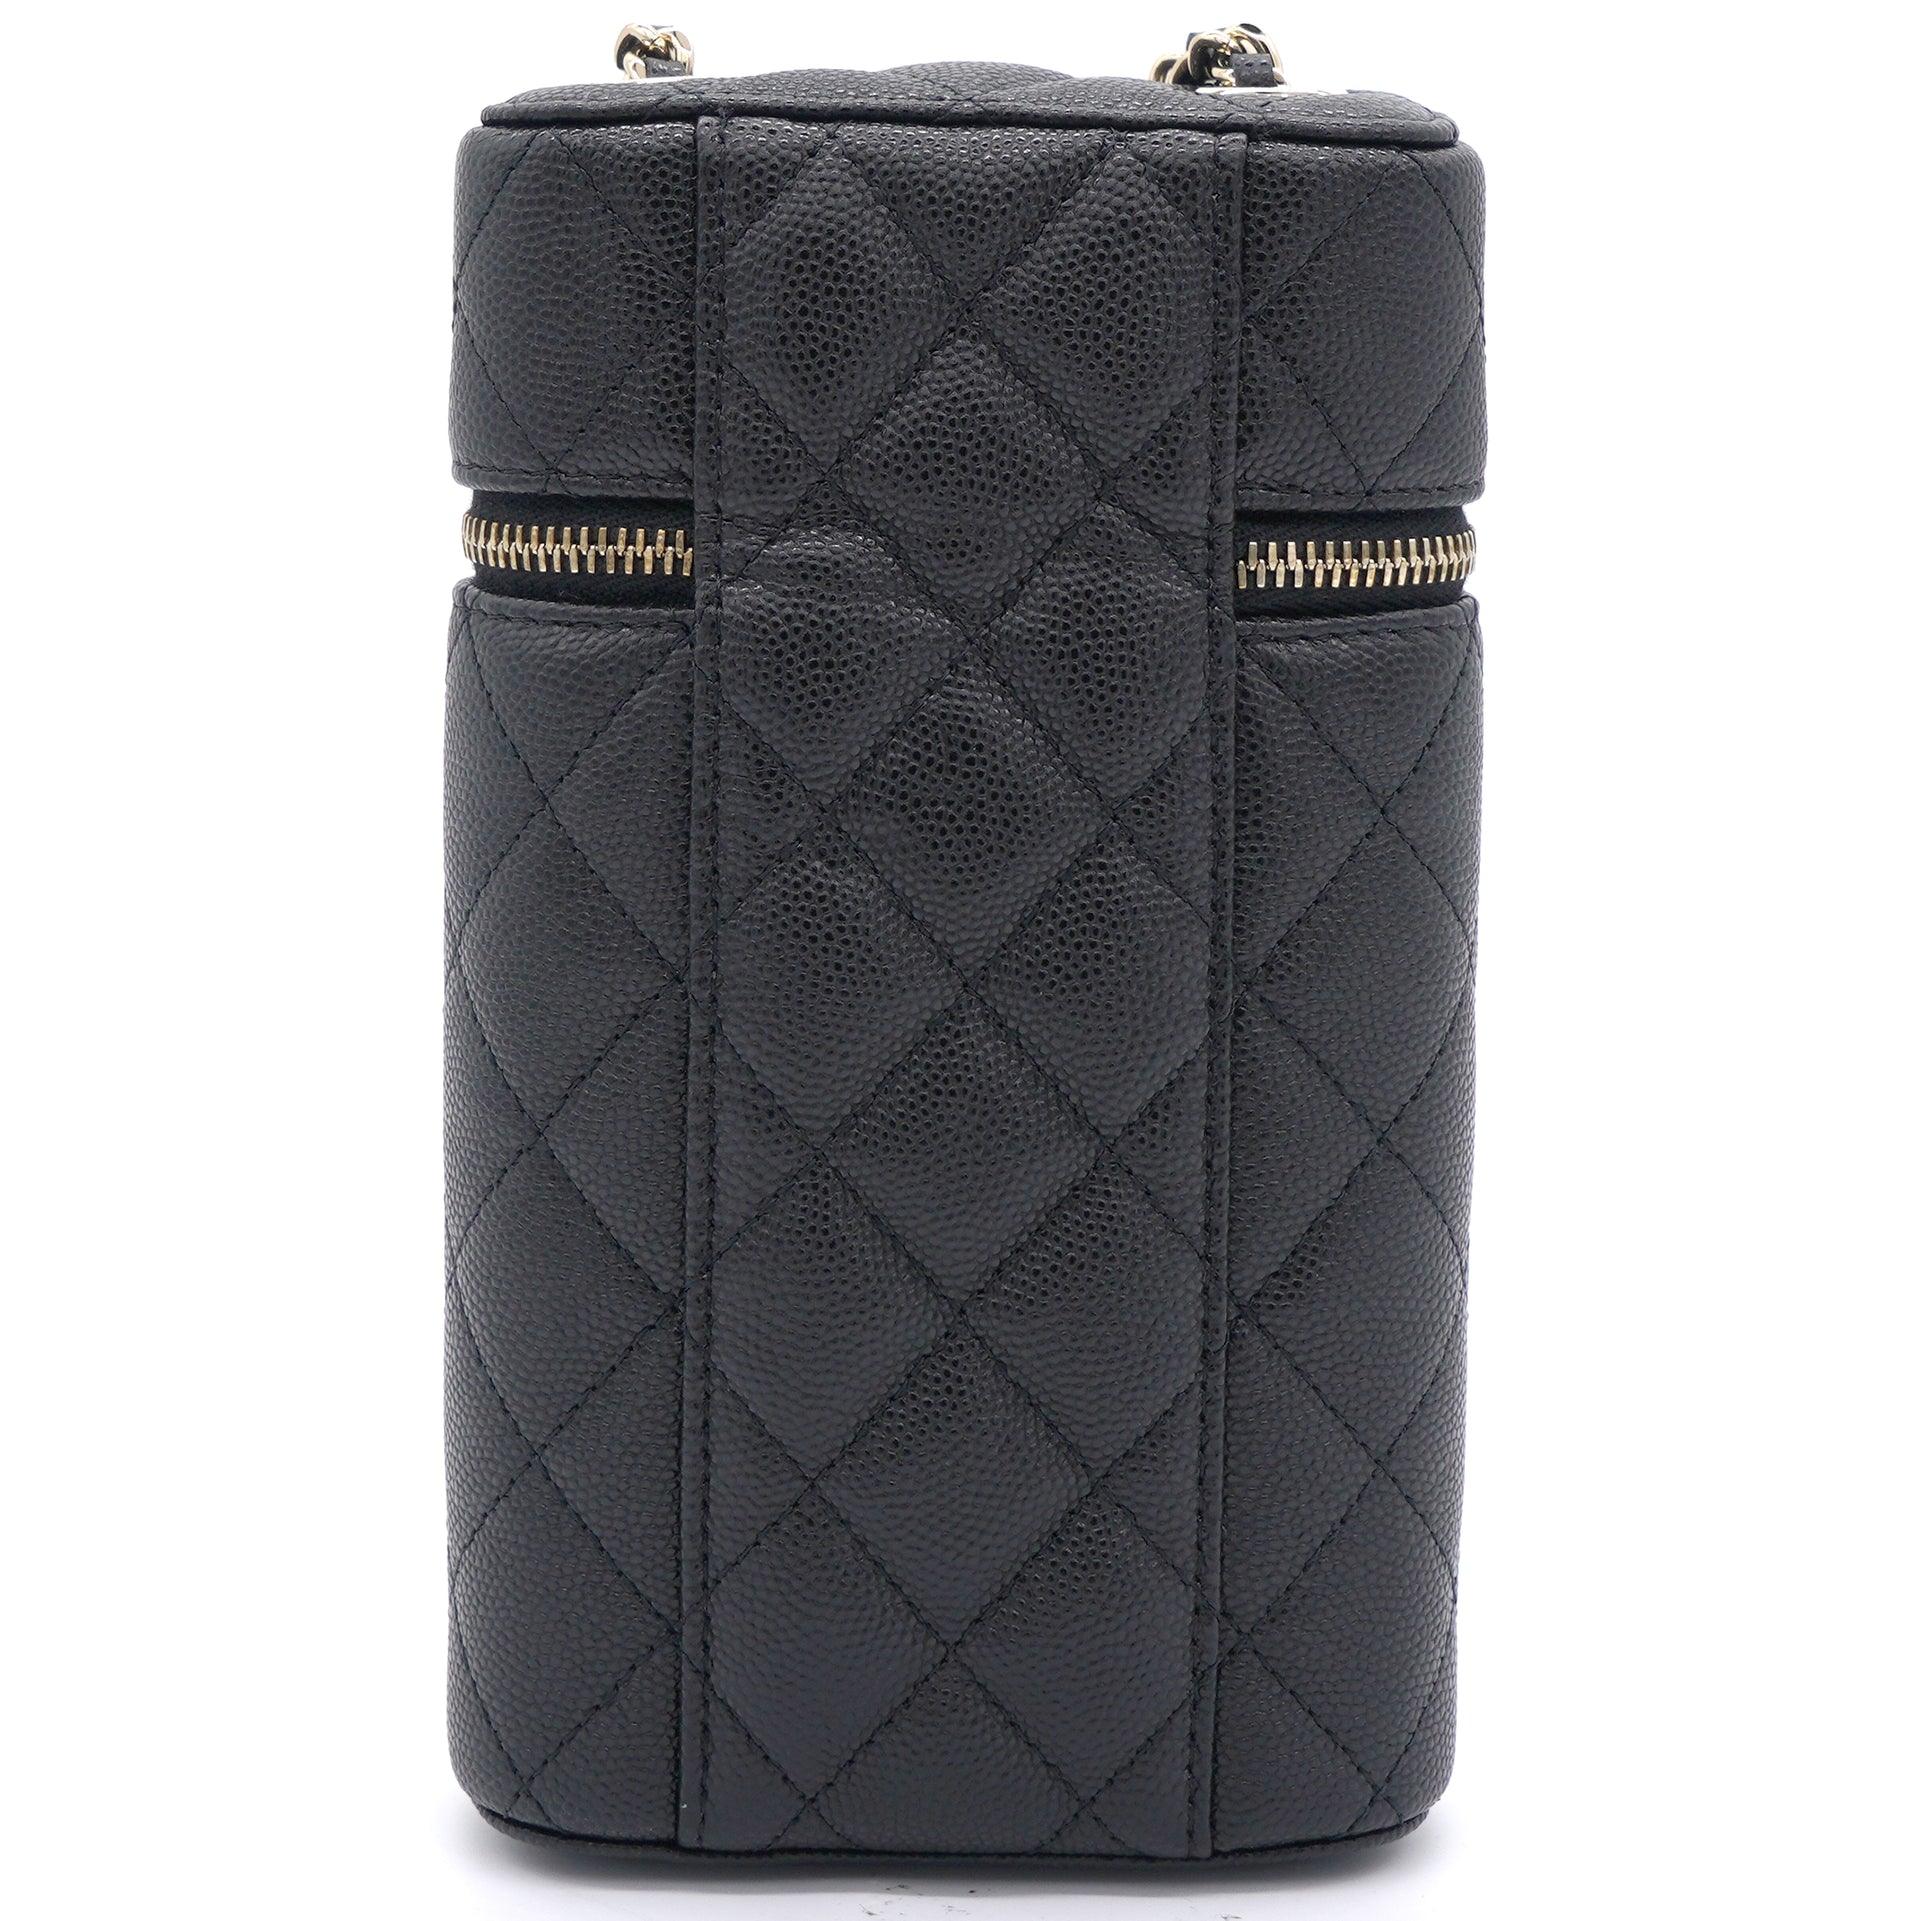 Chanel Black Quilted Lambskin 'CC' Classic Backpack Small Q6B0NE1IKH024